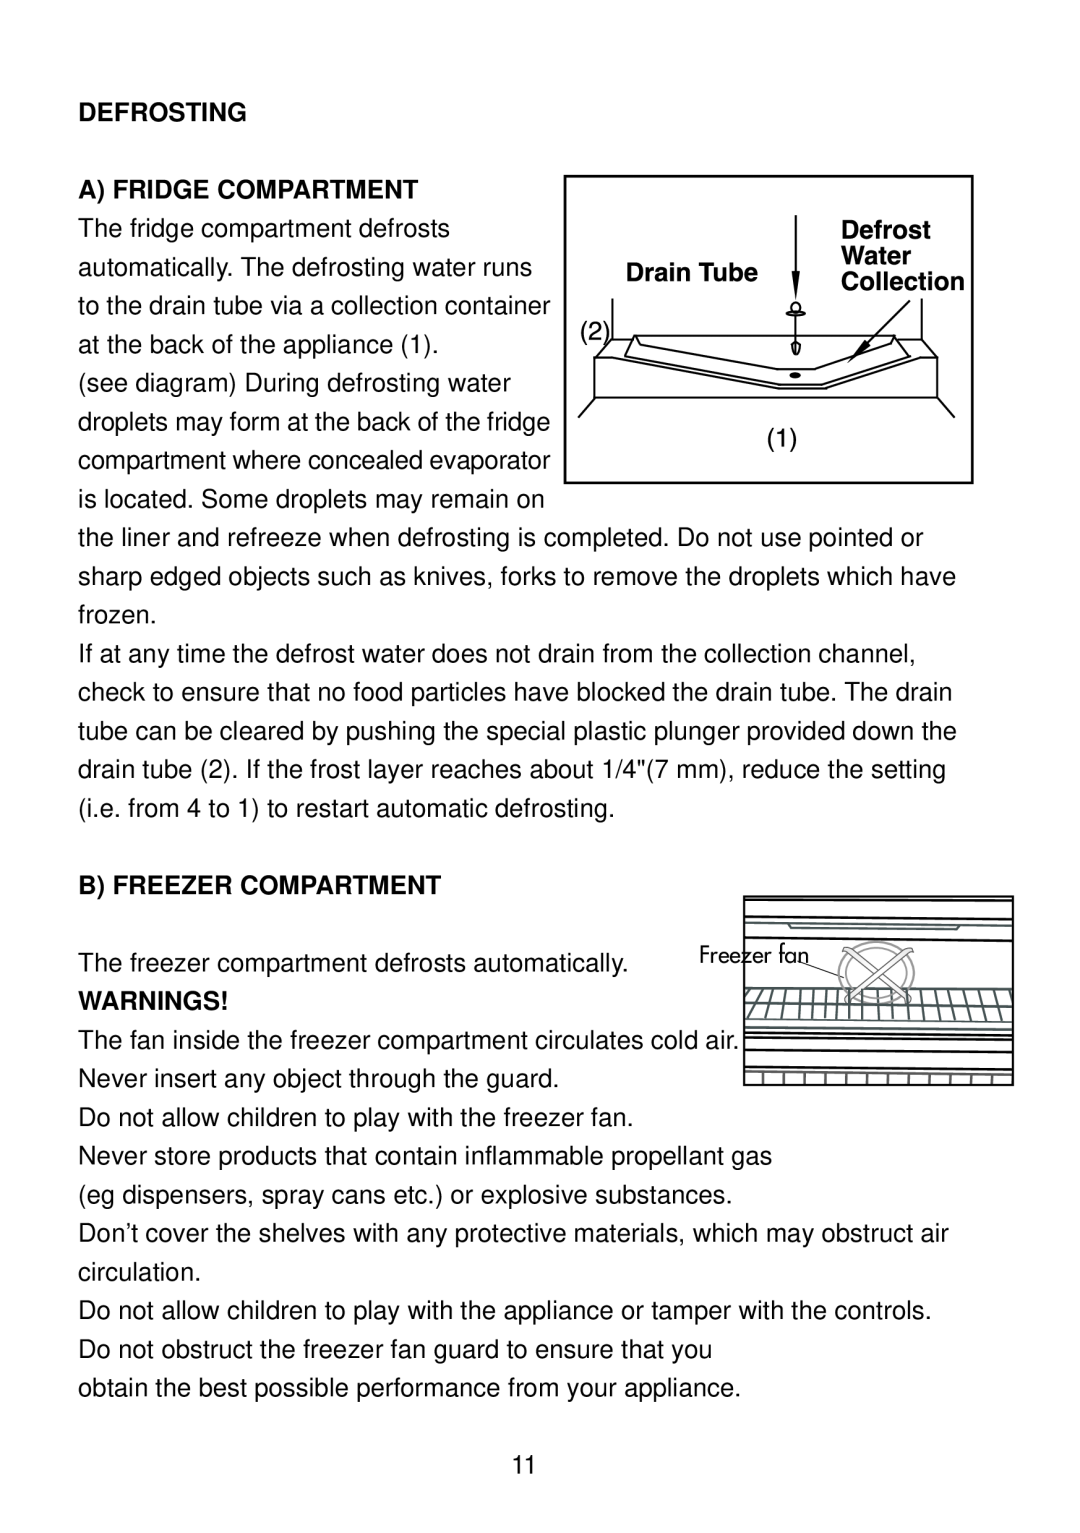 Glen Dimplex Home Appliances Ltd BE817 manual Defrosting A Fridge Compartment, B Freezer Compartment, Warnings 